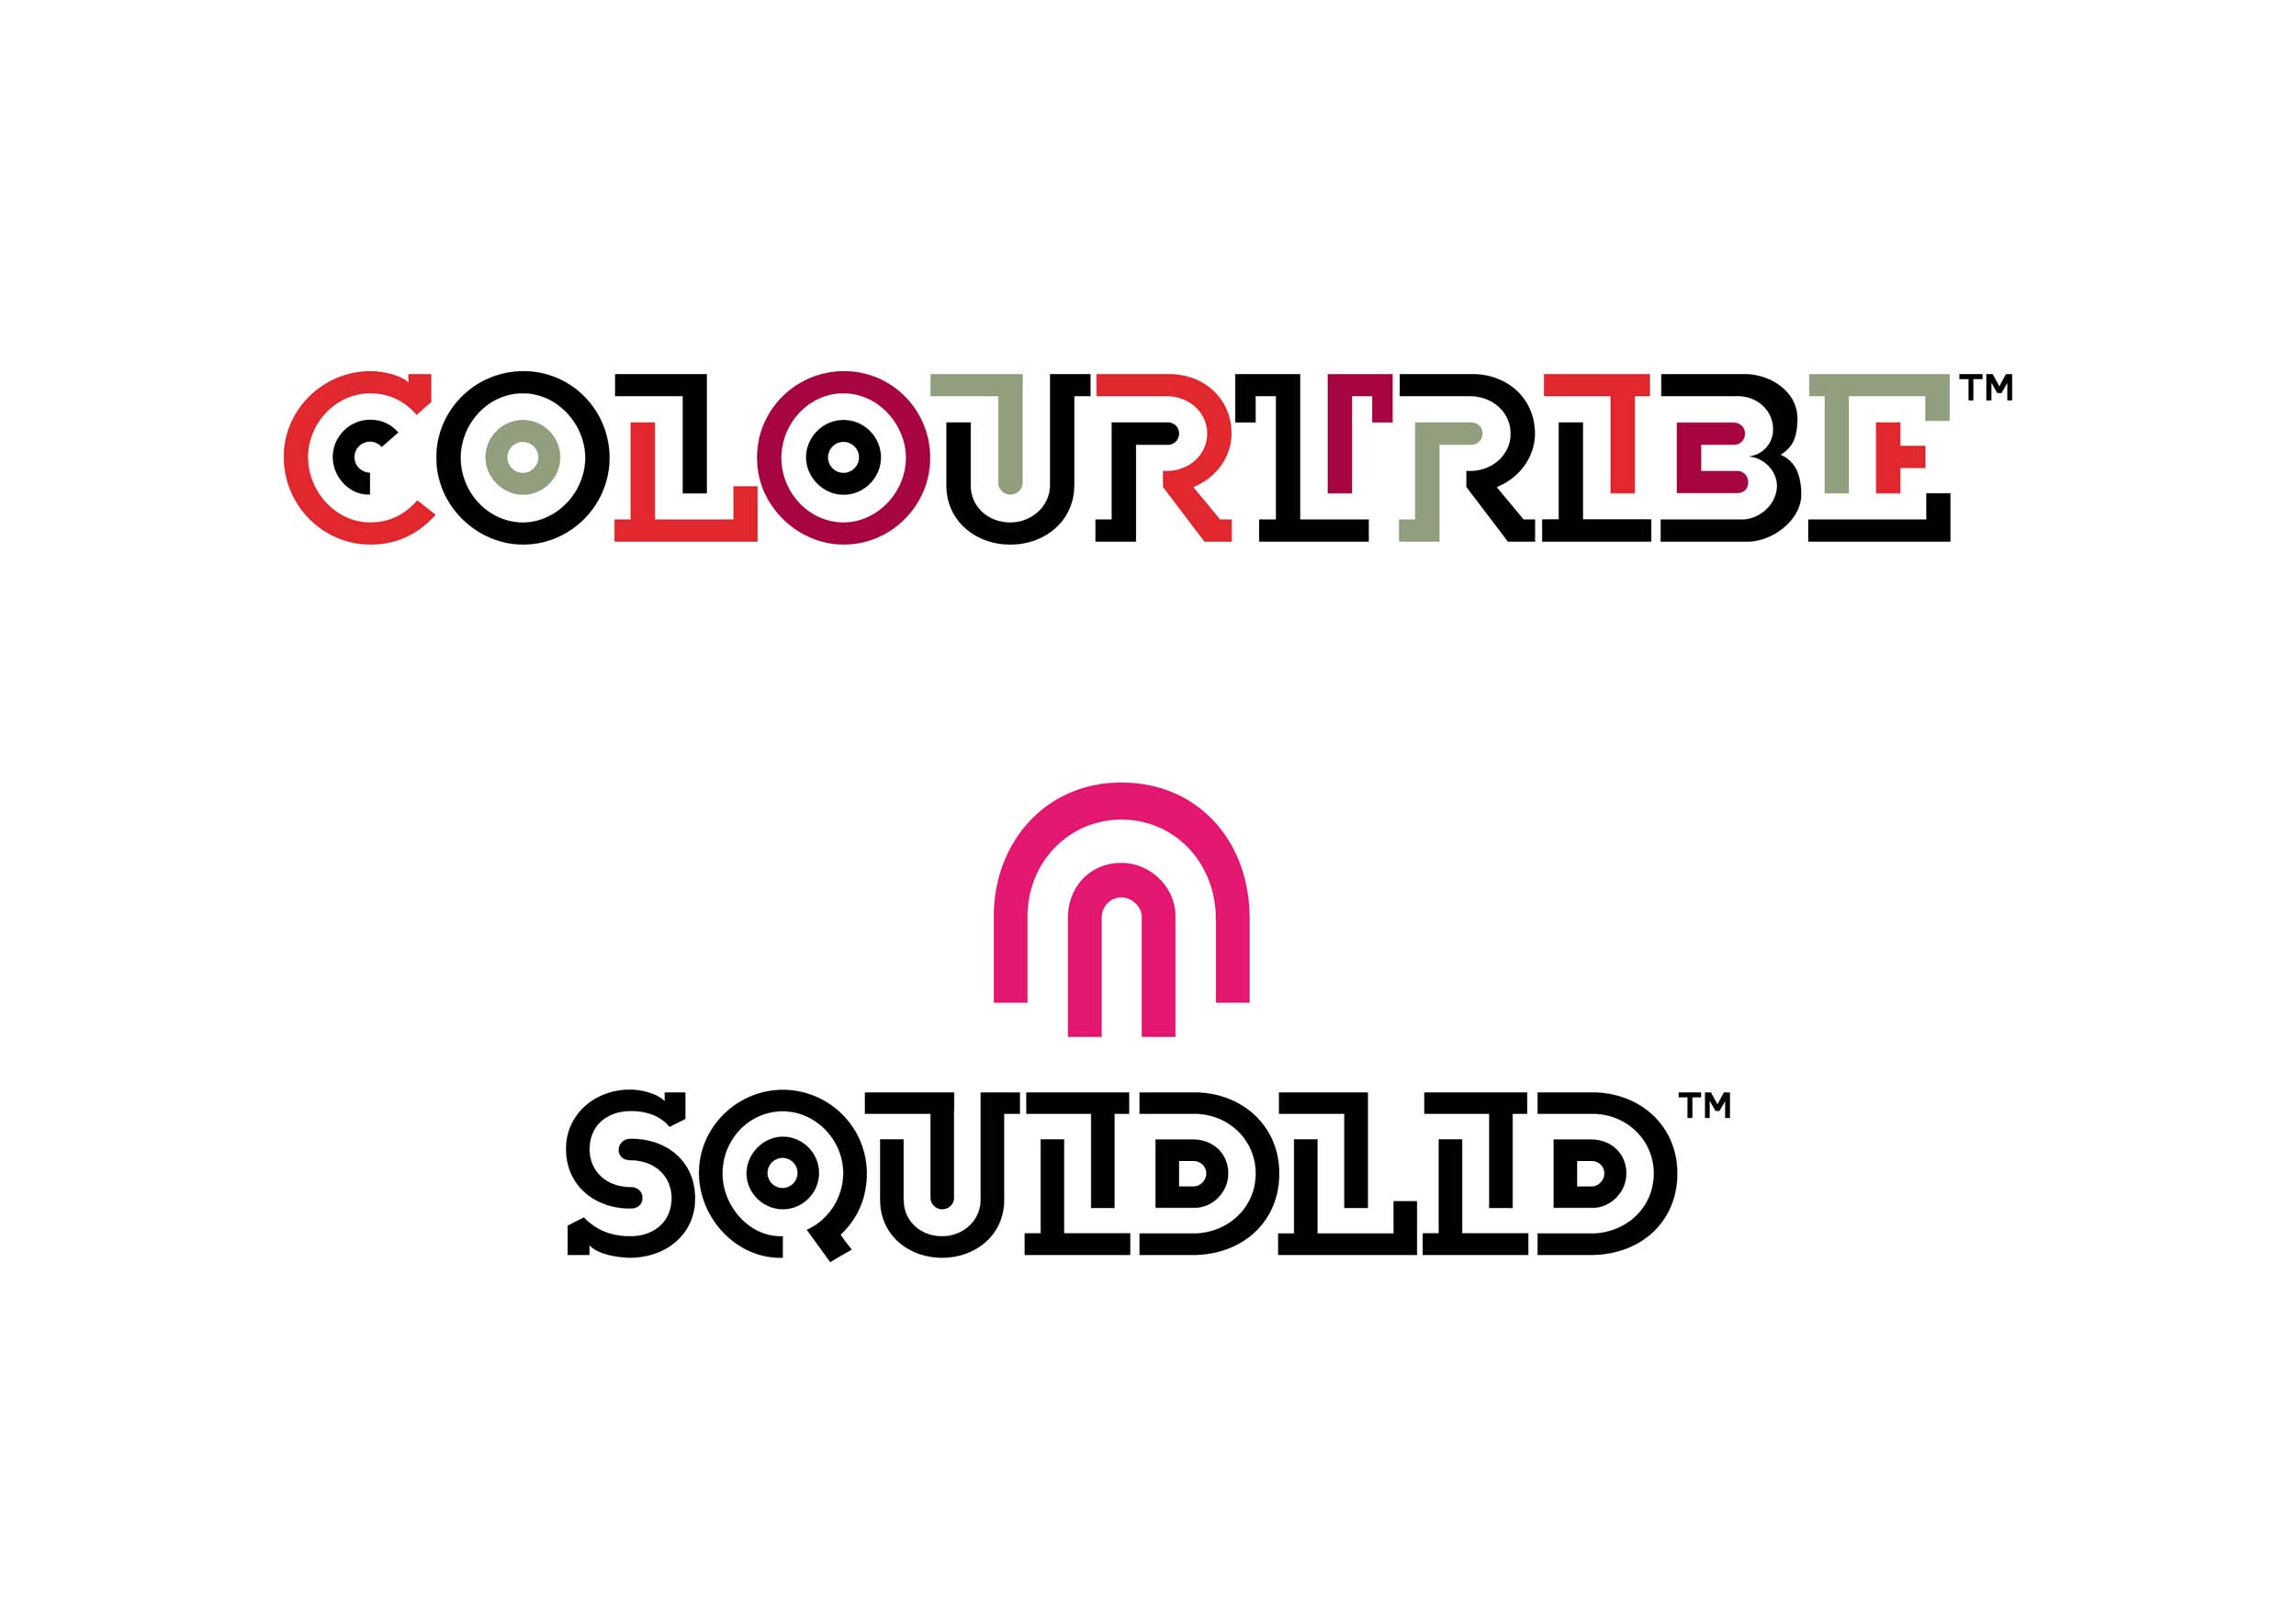 Logos Colourtribe Squidlid.jpg